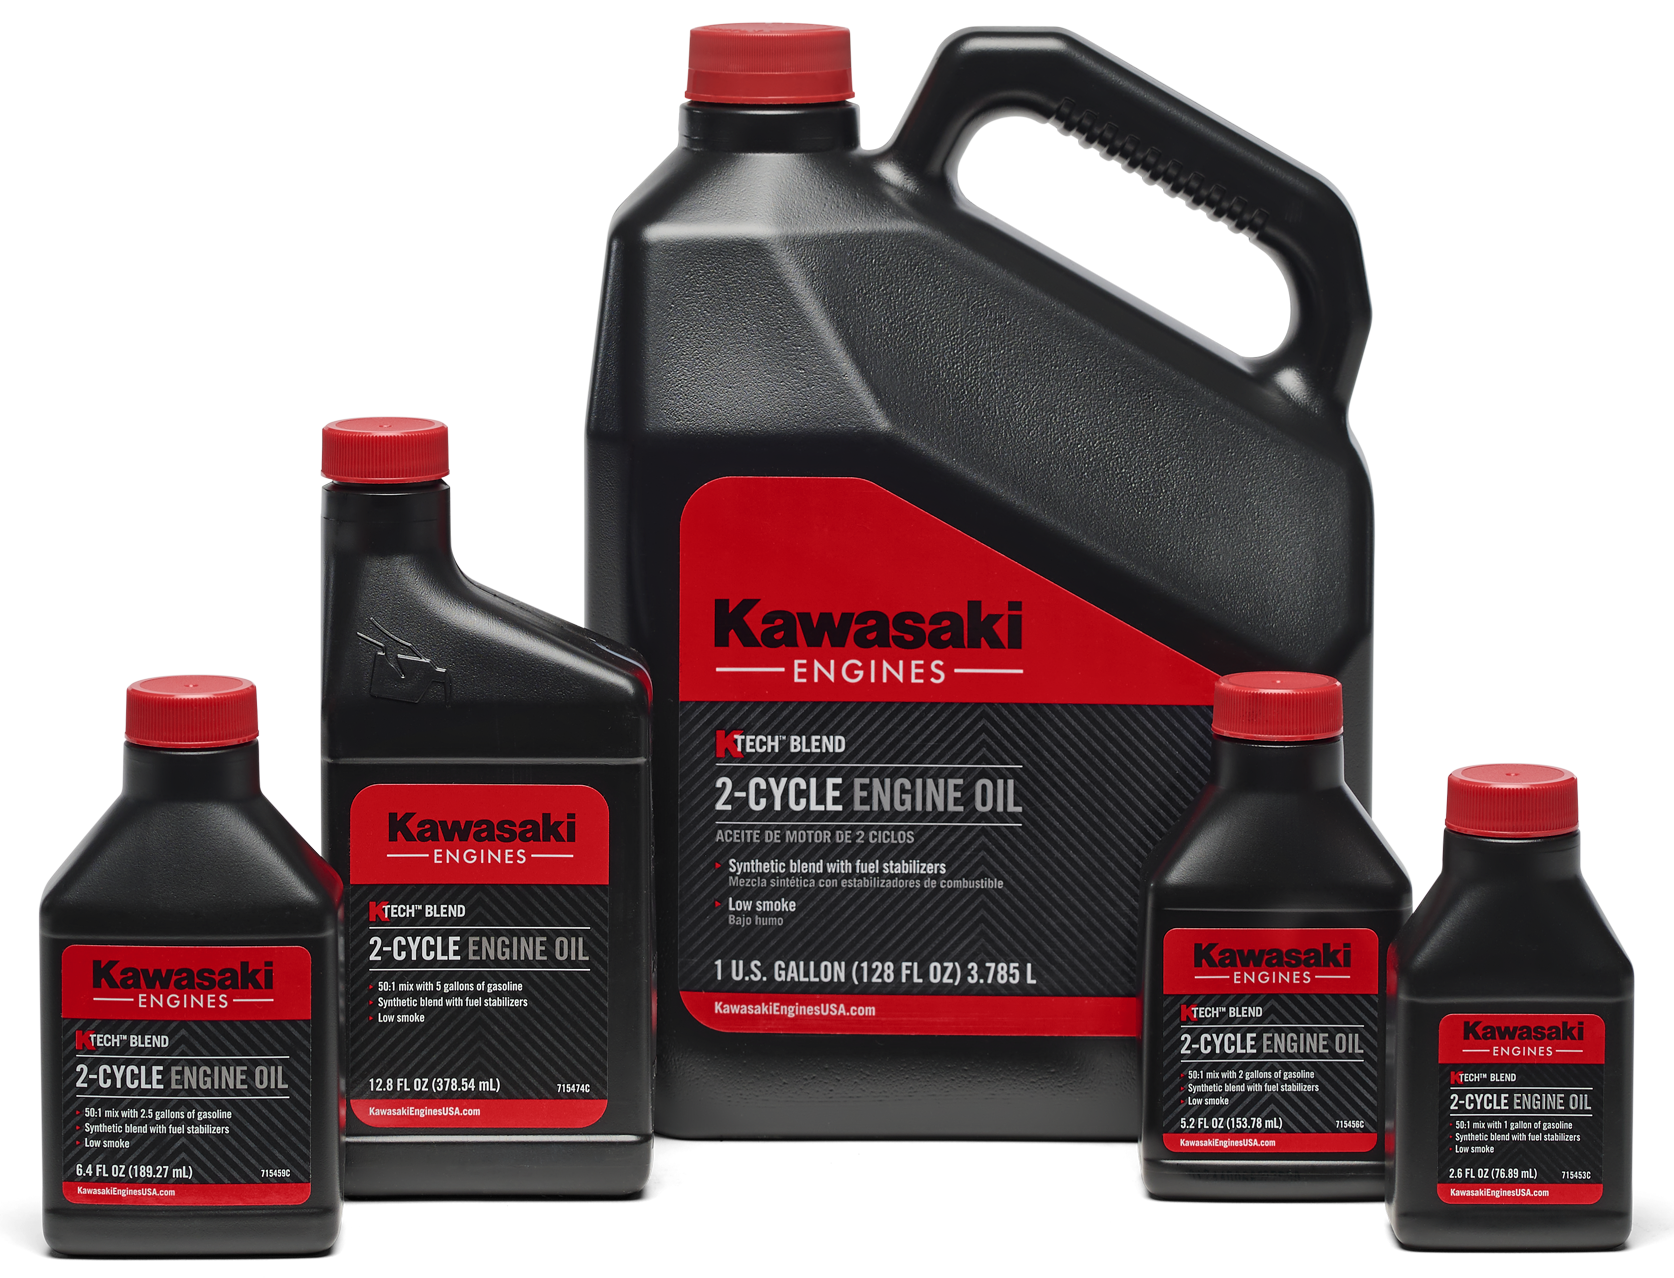 Kawasaki KTECH™ BLEND 2-Cycle Engine Oil | Kawasaki Engines USA